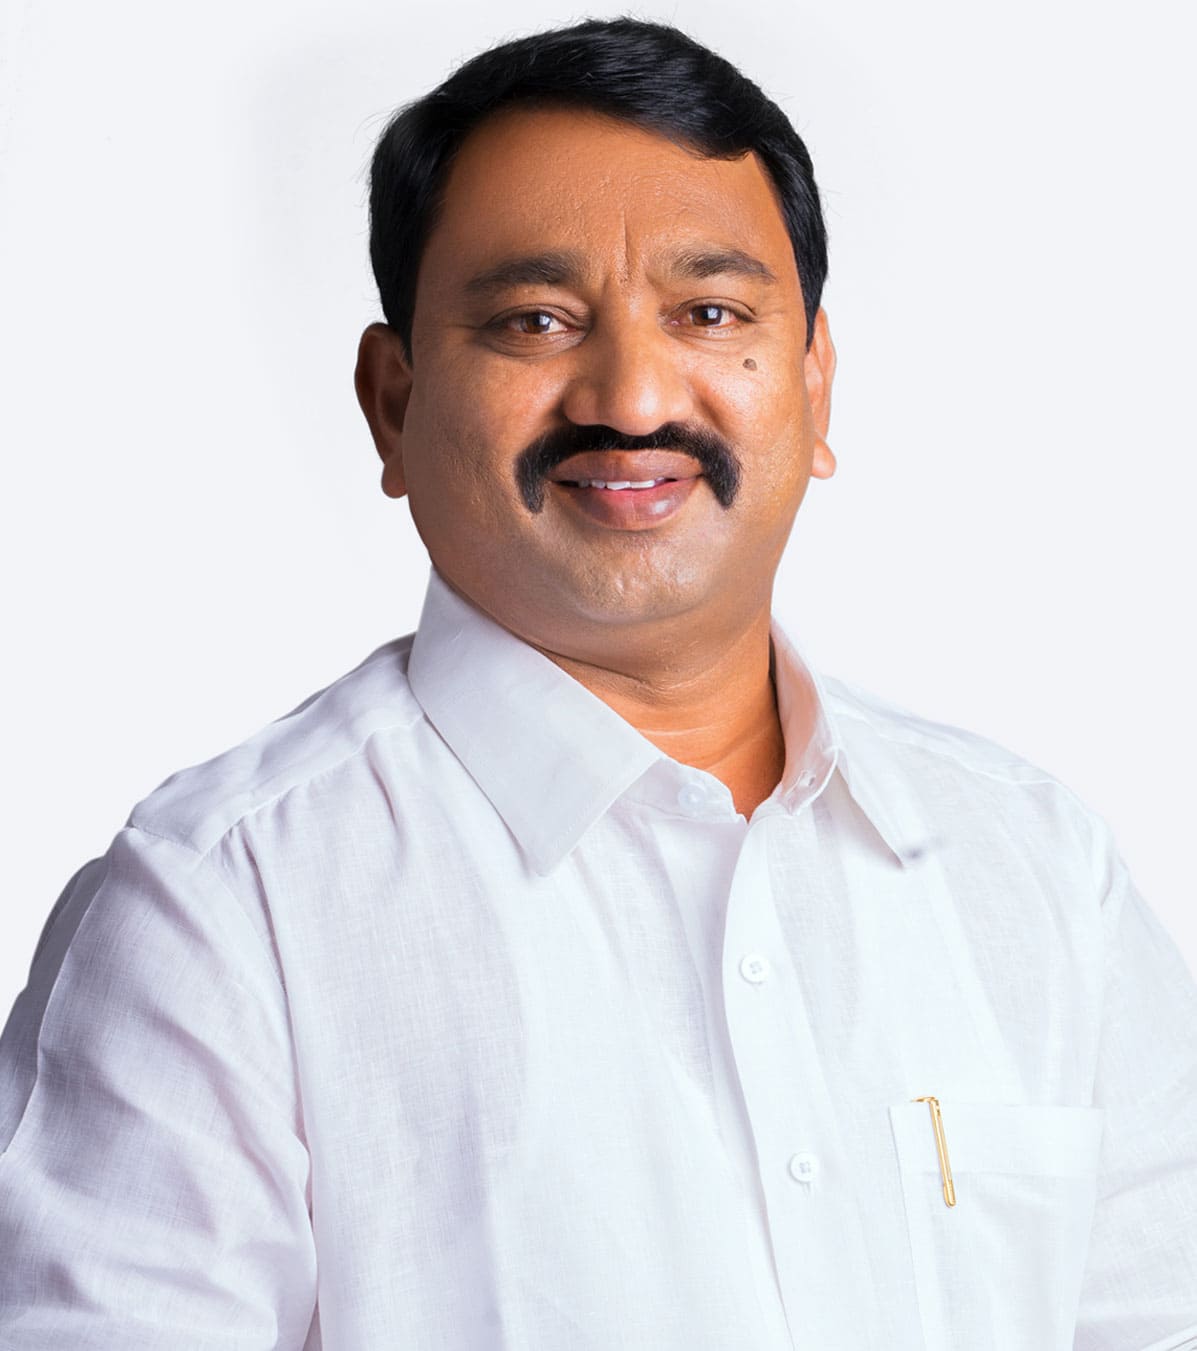 Meet the Visionary: Mr. N Shankar Rao - Chairman of Subhagruha Real Estate, Leading Real Estate Developer